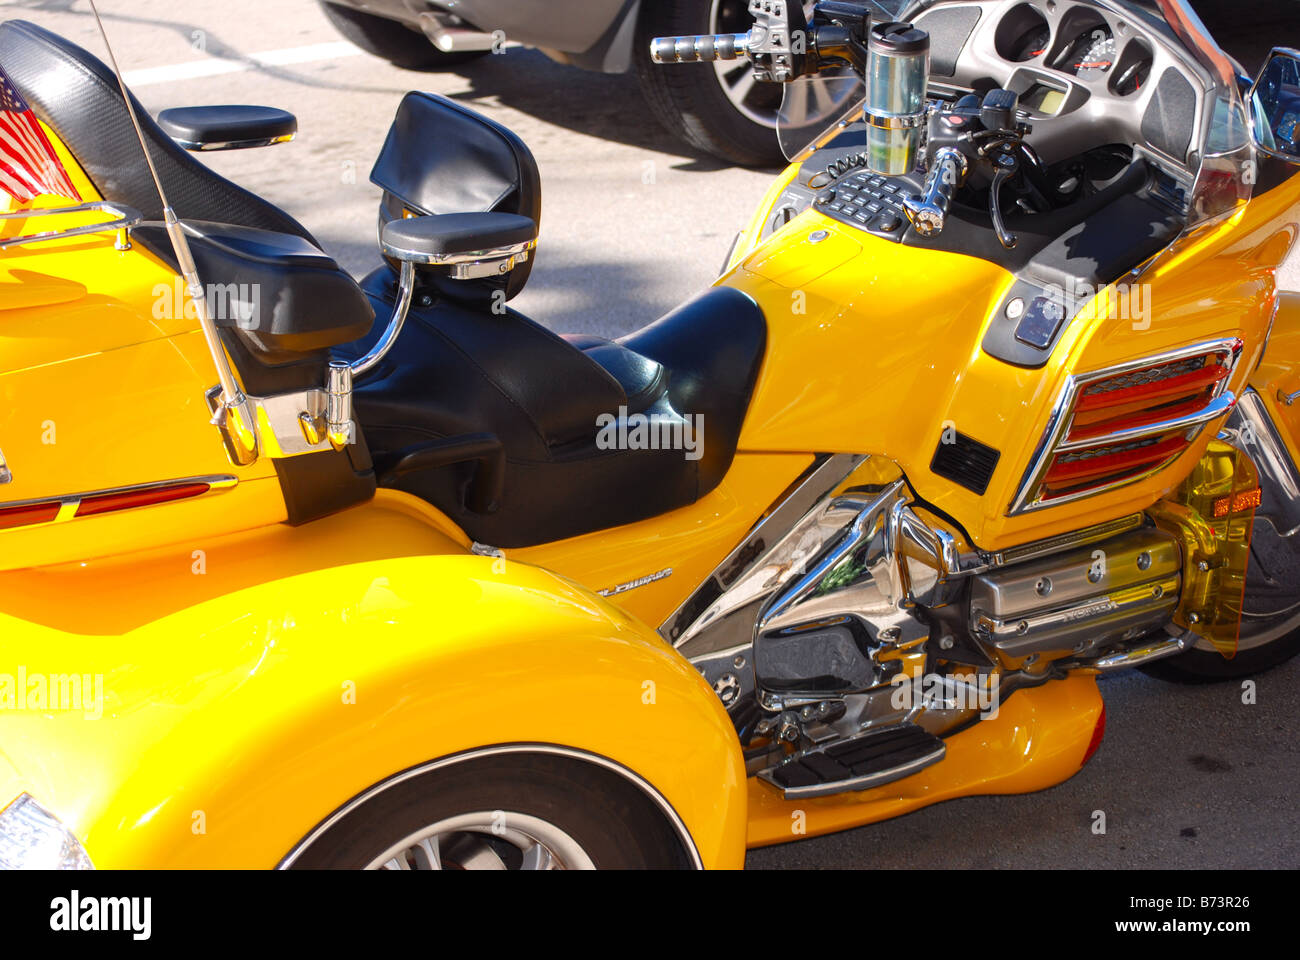 Bright Yellow Honda three wheel motorcycle Stock Photo